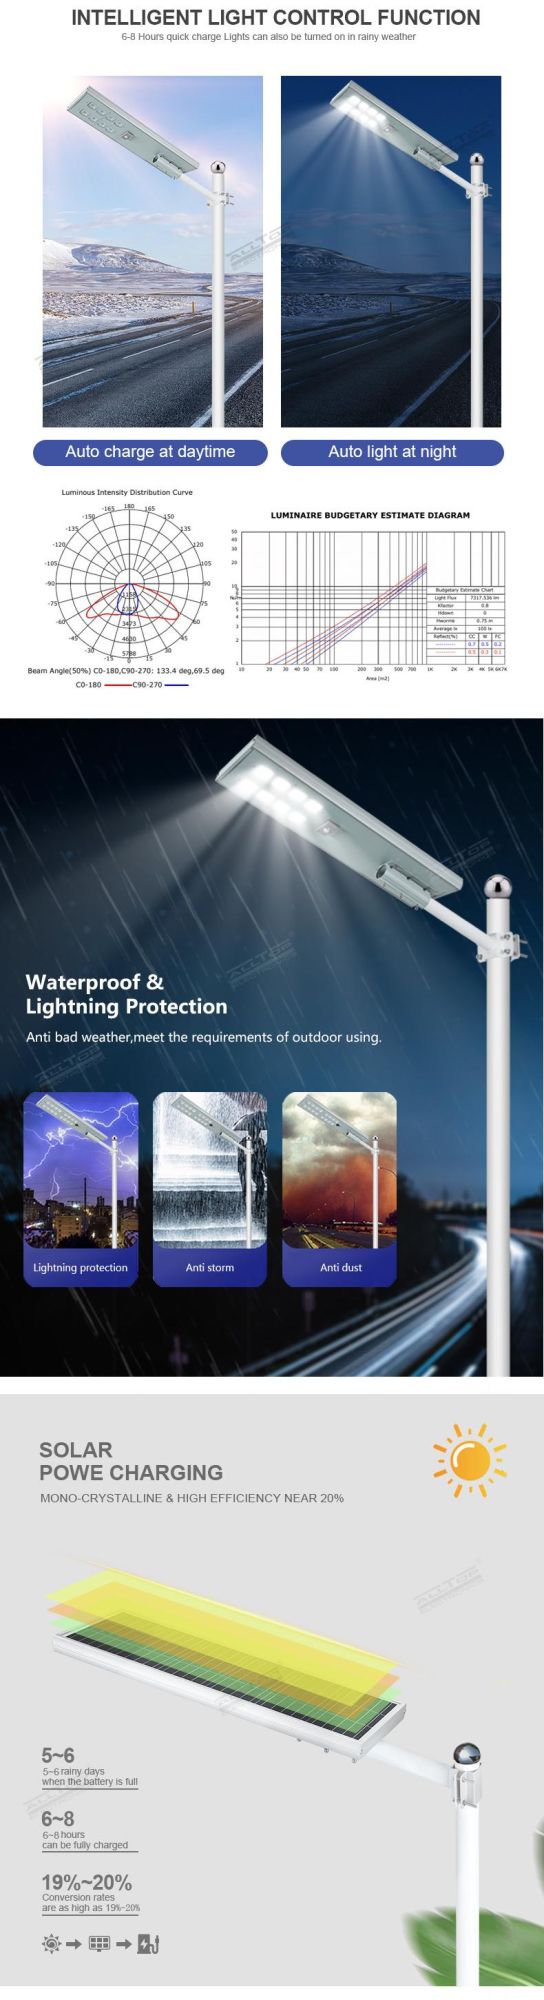 Alltop High Brightness SMD 60W 90W 120W IP65 Waterproof Outdoor All in One LED Solar Street Lighting